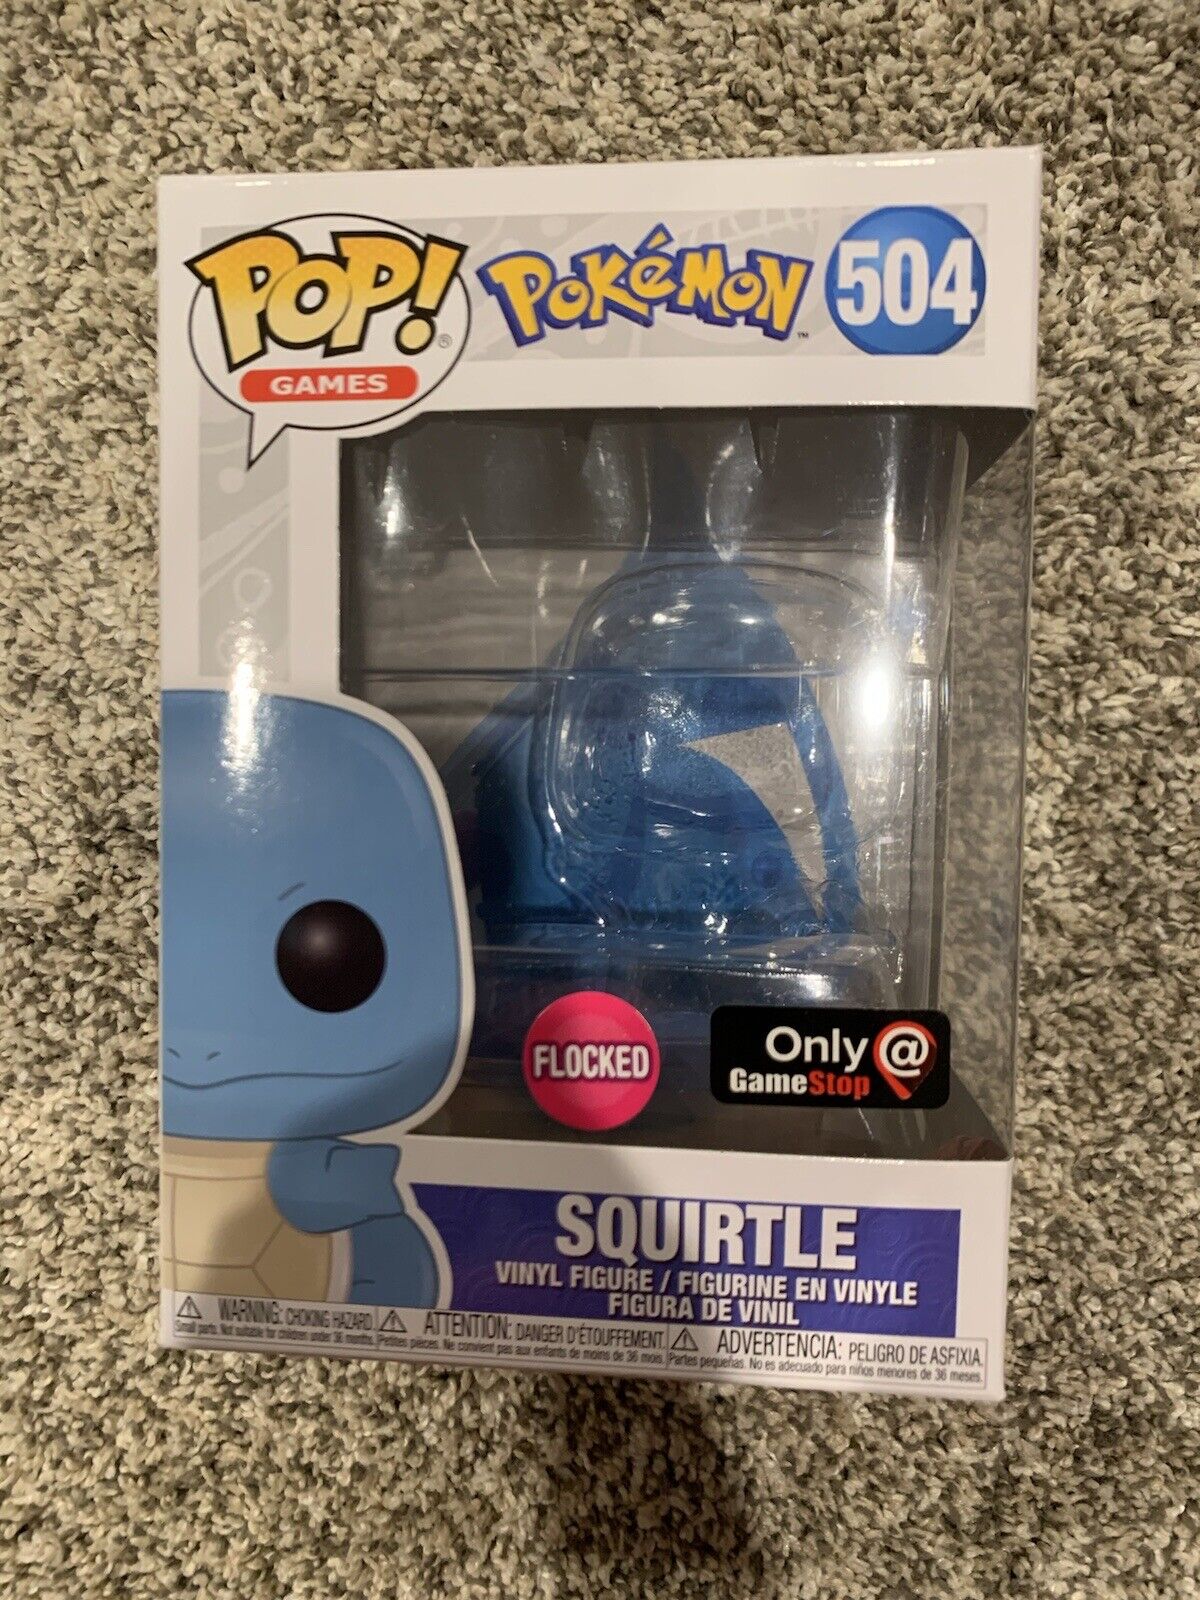 Funko POP Games “Pokémon” Squirtle #504 (GameStop) [Flocked] BOX & INSERT ONLY